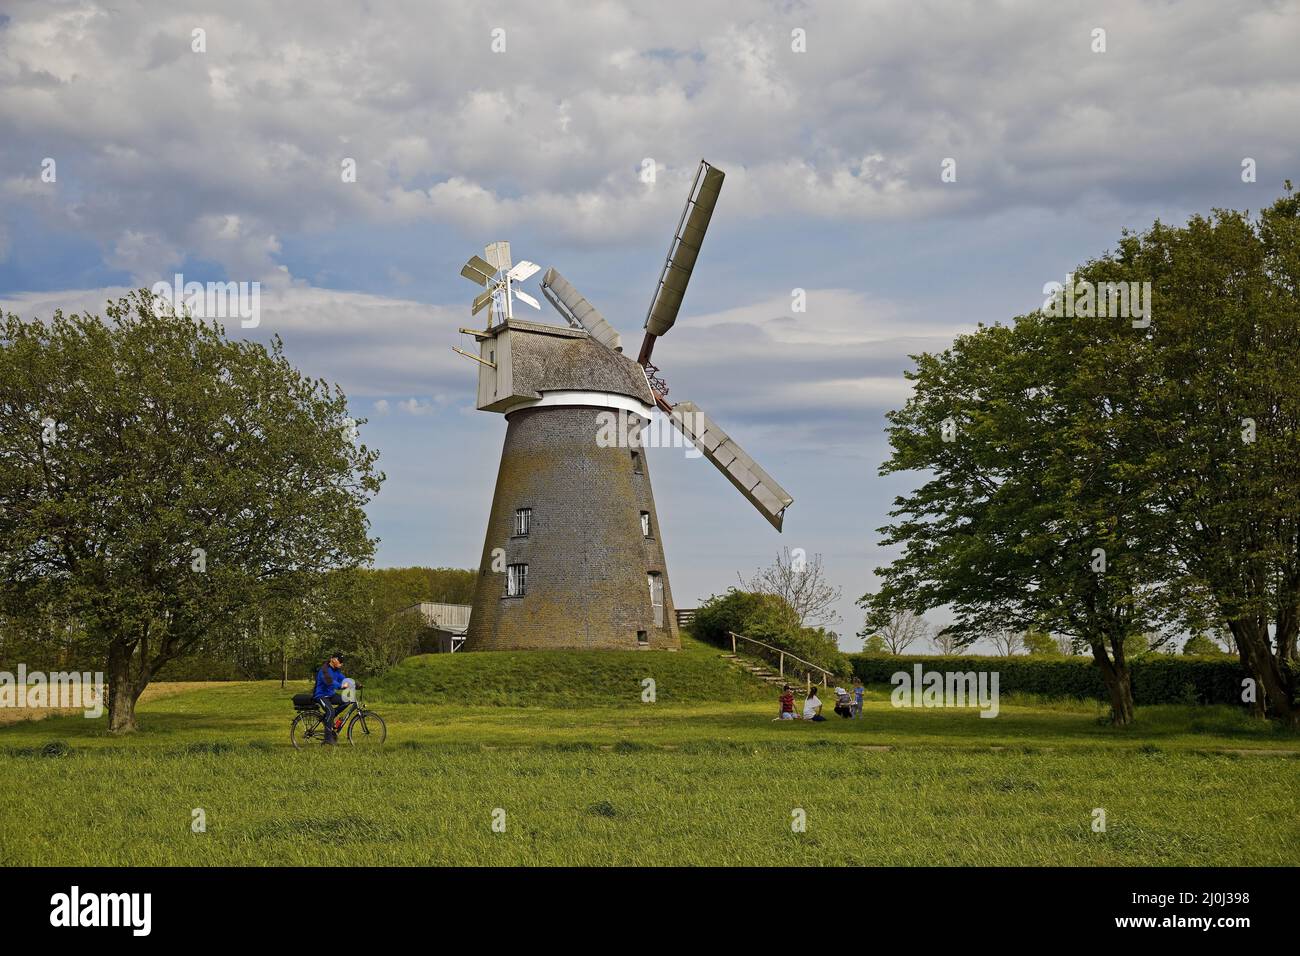 Breberer Museum windmill, Selfkant-millstreet, Gangelt, Lower Rhine, Germany, Europe Stock Photo